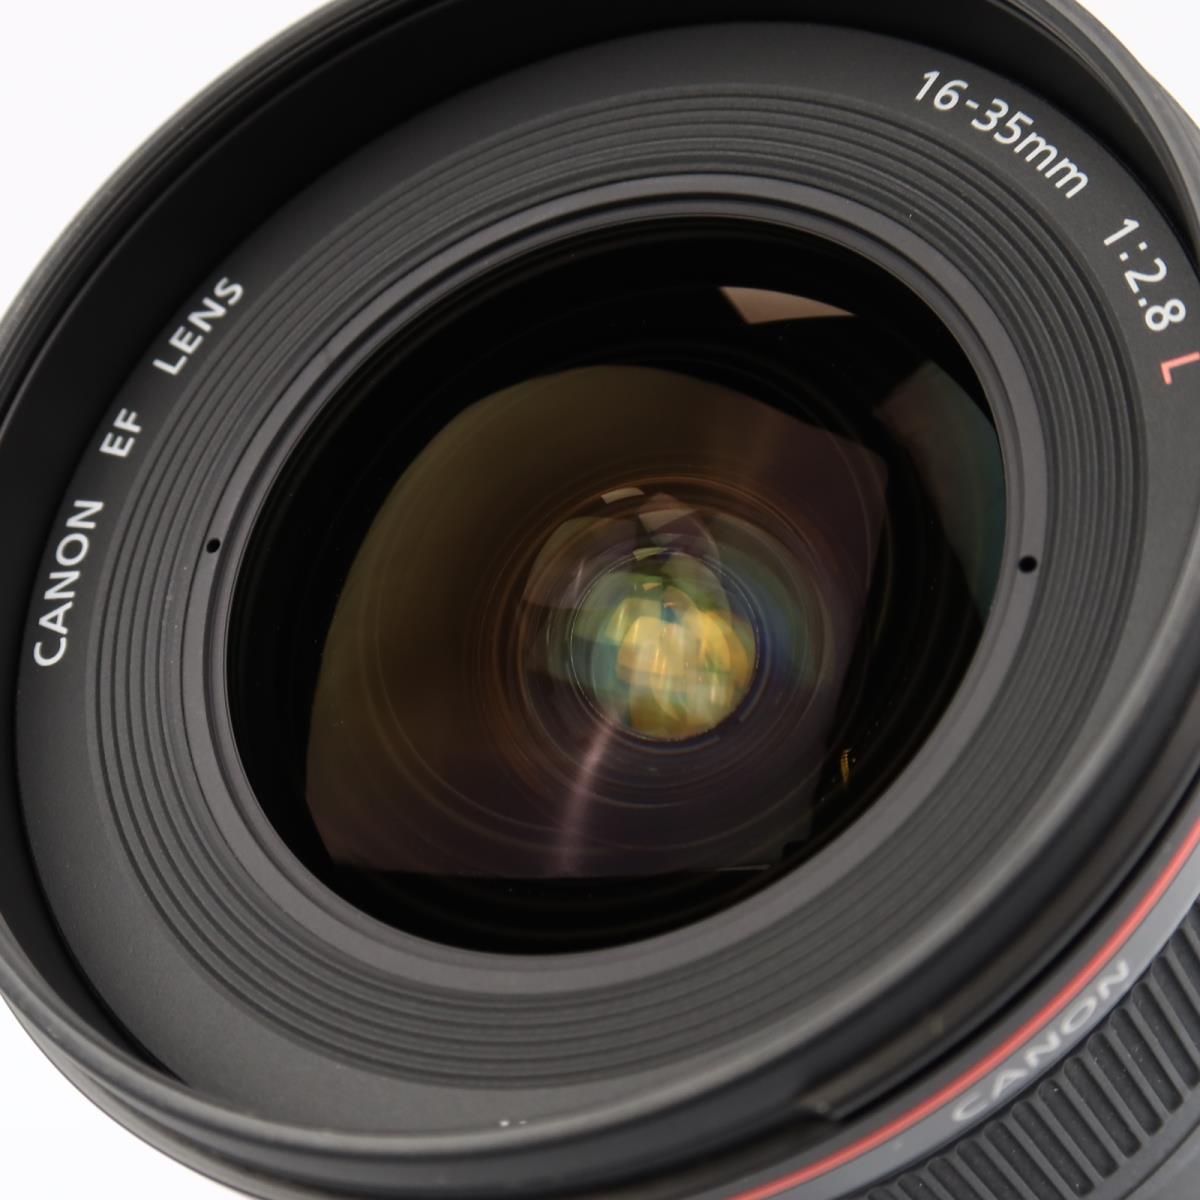 (Myyty) Canon EF 16-35mm f/2.8 L II USM (käytetty)